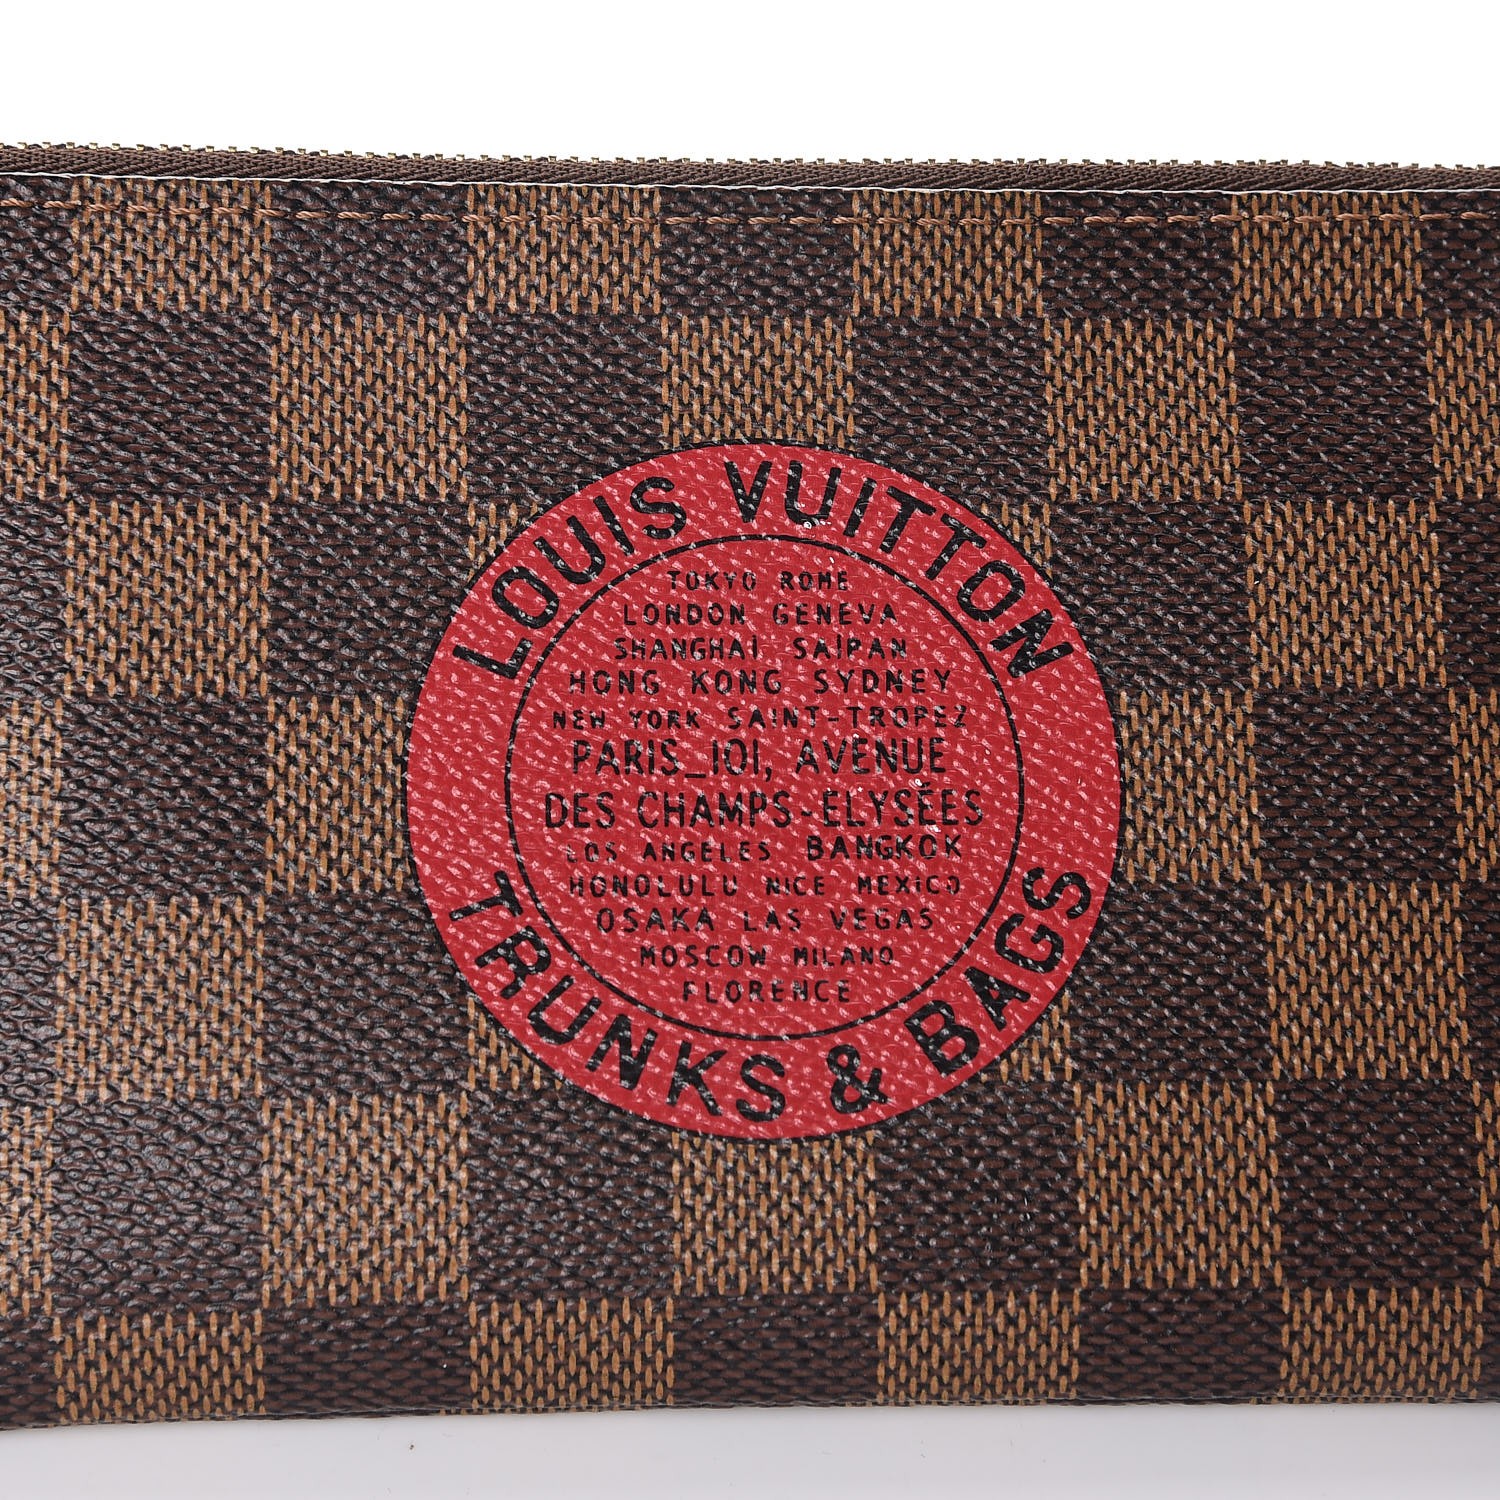 Louis Vuitton - Damier Ebene Canvas Vertical Bifold Wallet - Catawiki